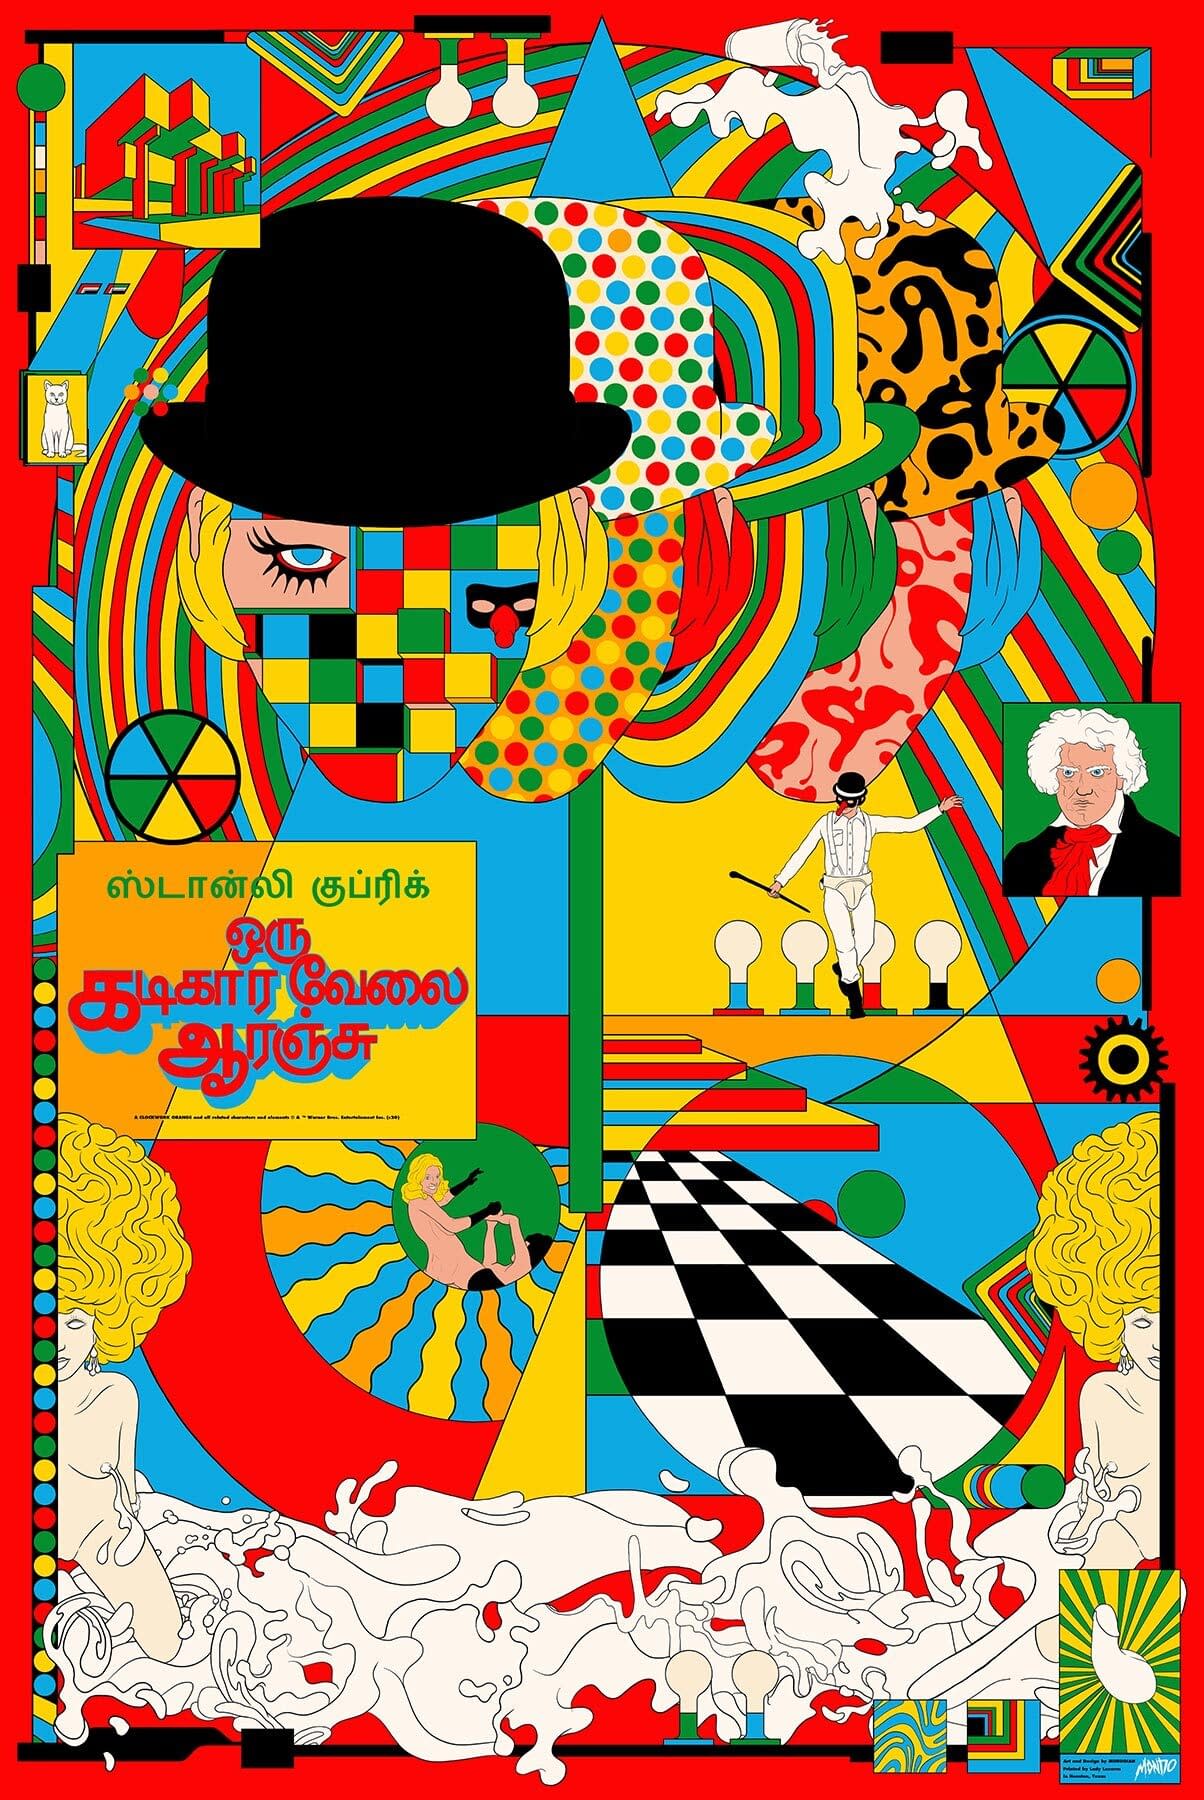 New Mondo Posters For Clockwork Orange, Scoob!, and Possesor